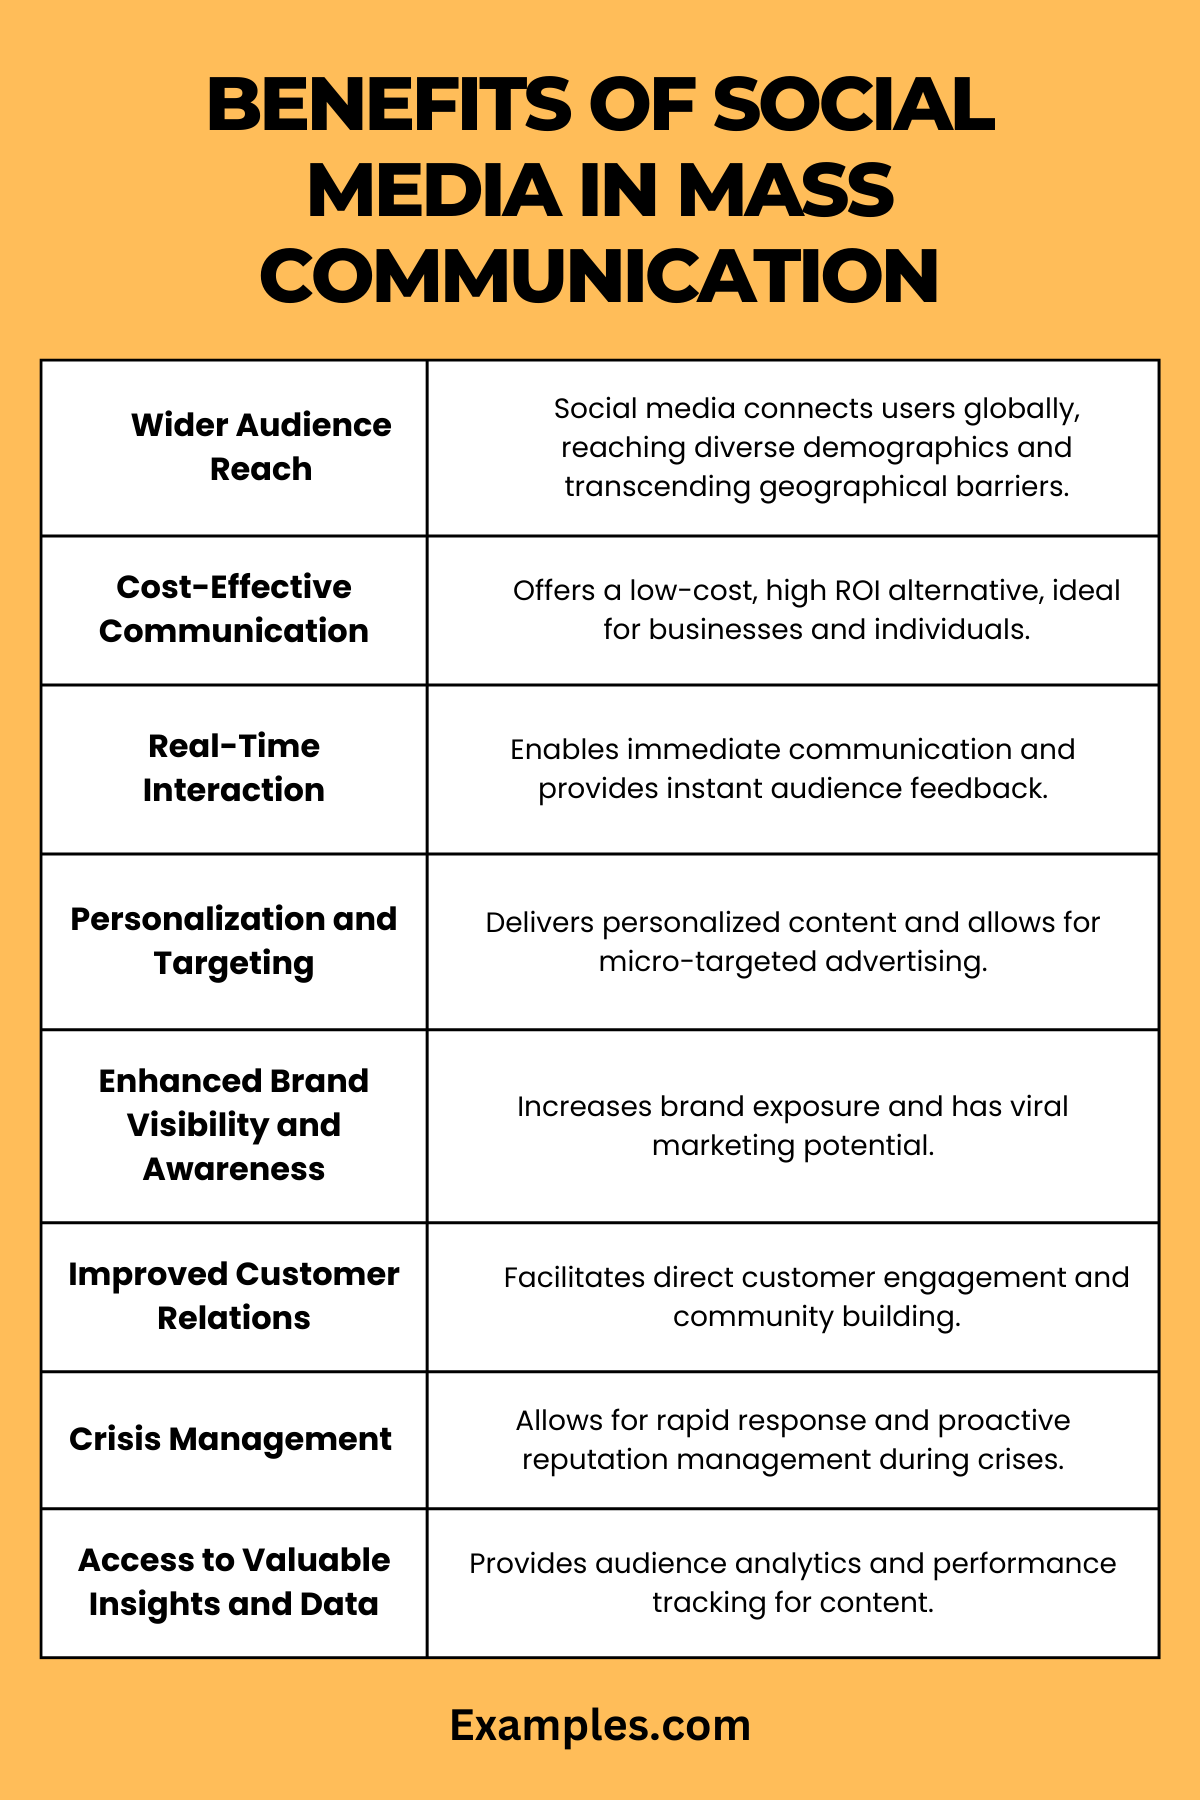 Benefits of Social Media in Mass Communication